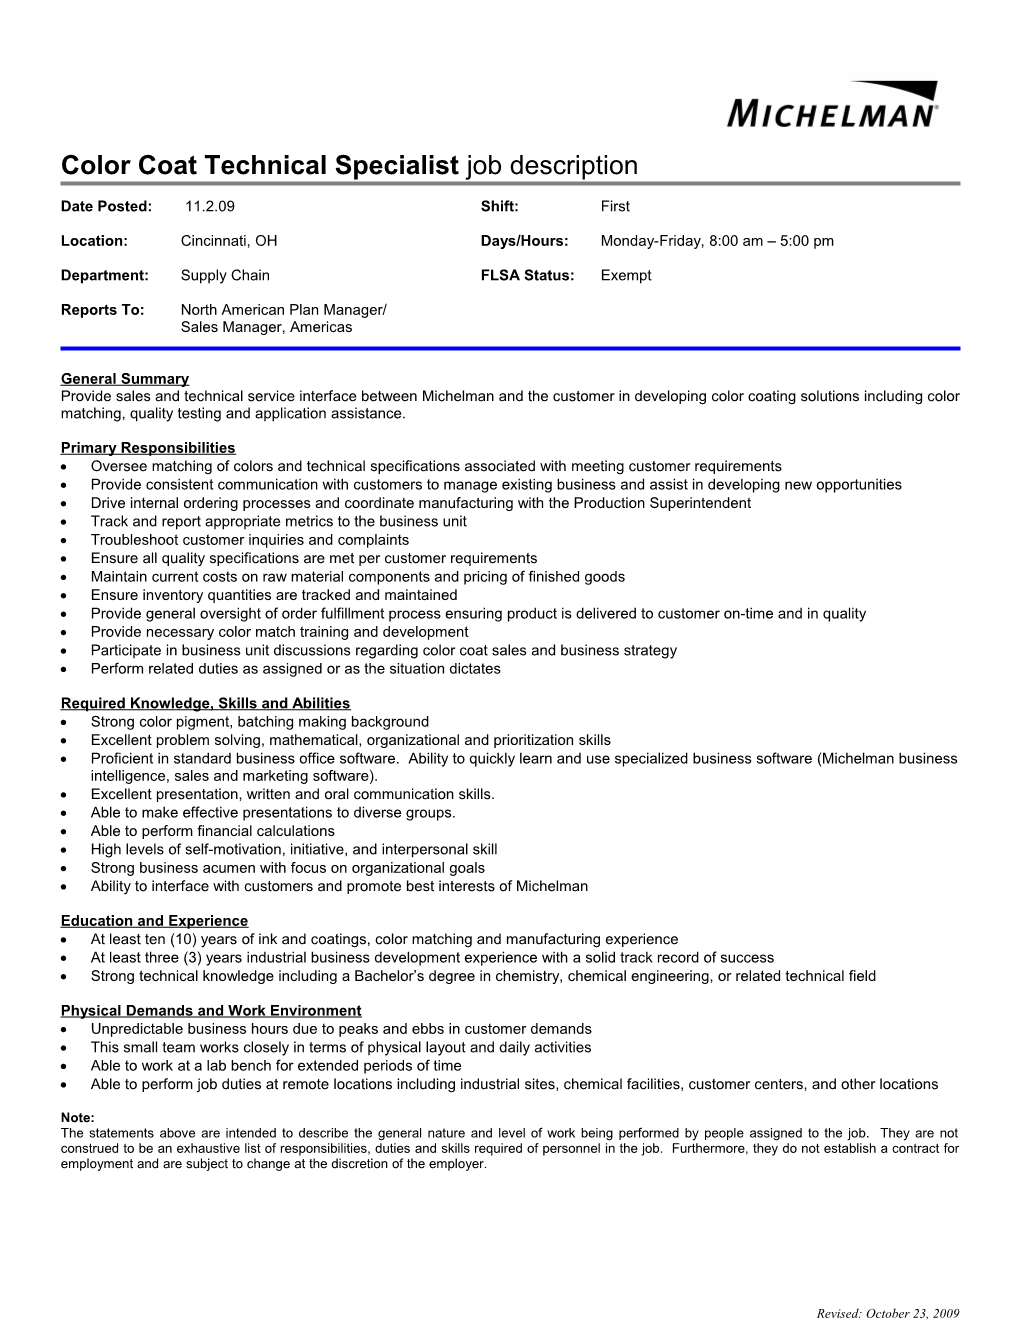 Colorcoat Technical Specialist Job Description